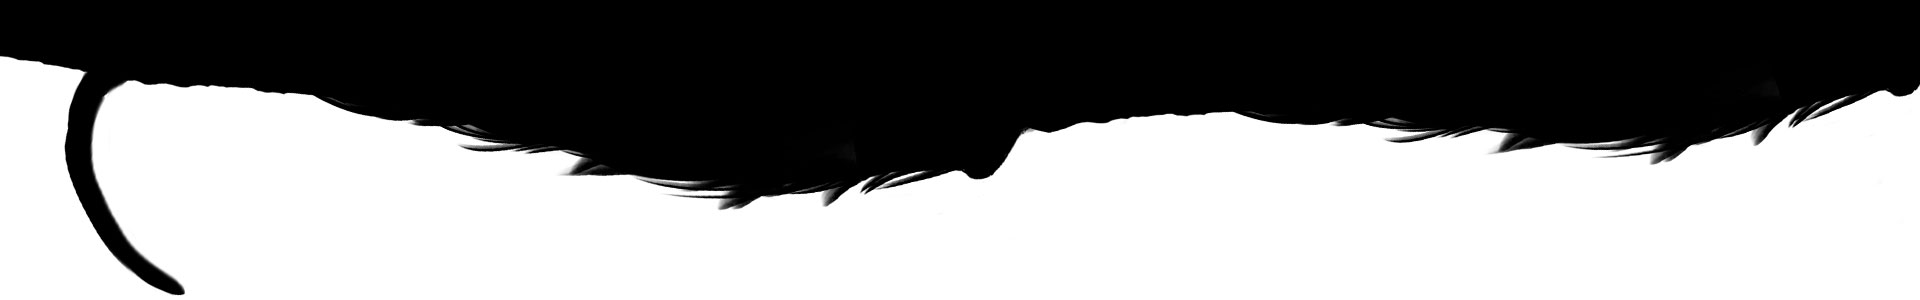 Černobílý obrázek krysí srsti a ocasu.